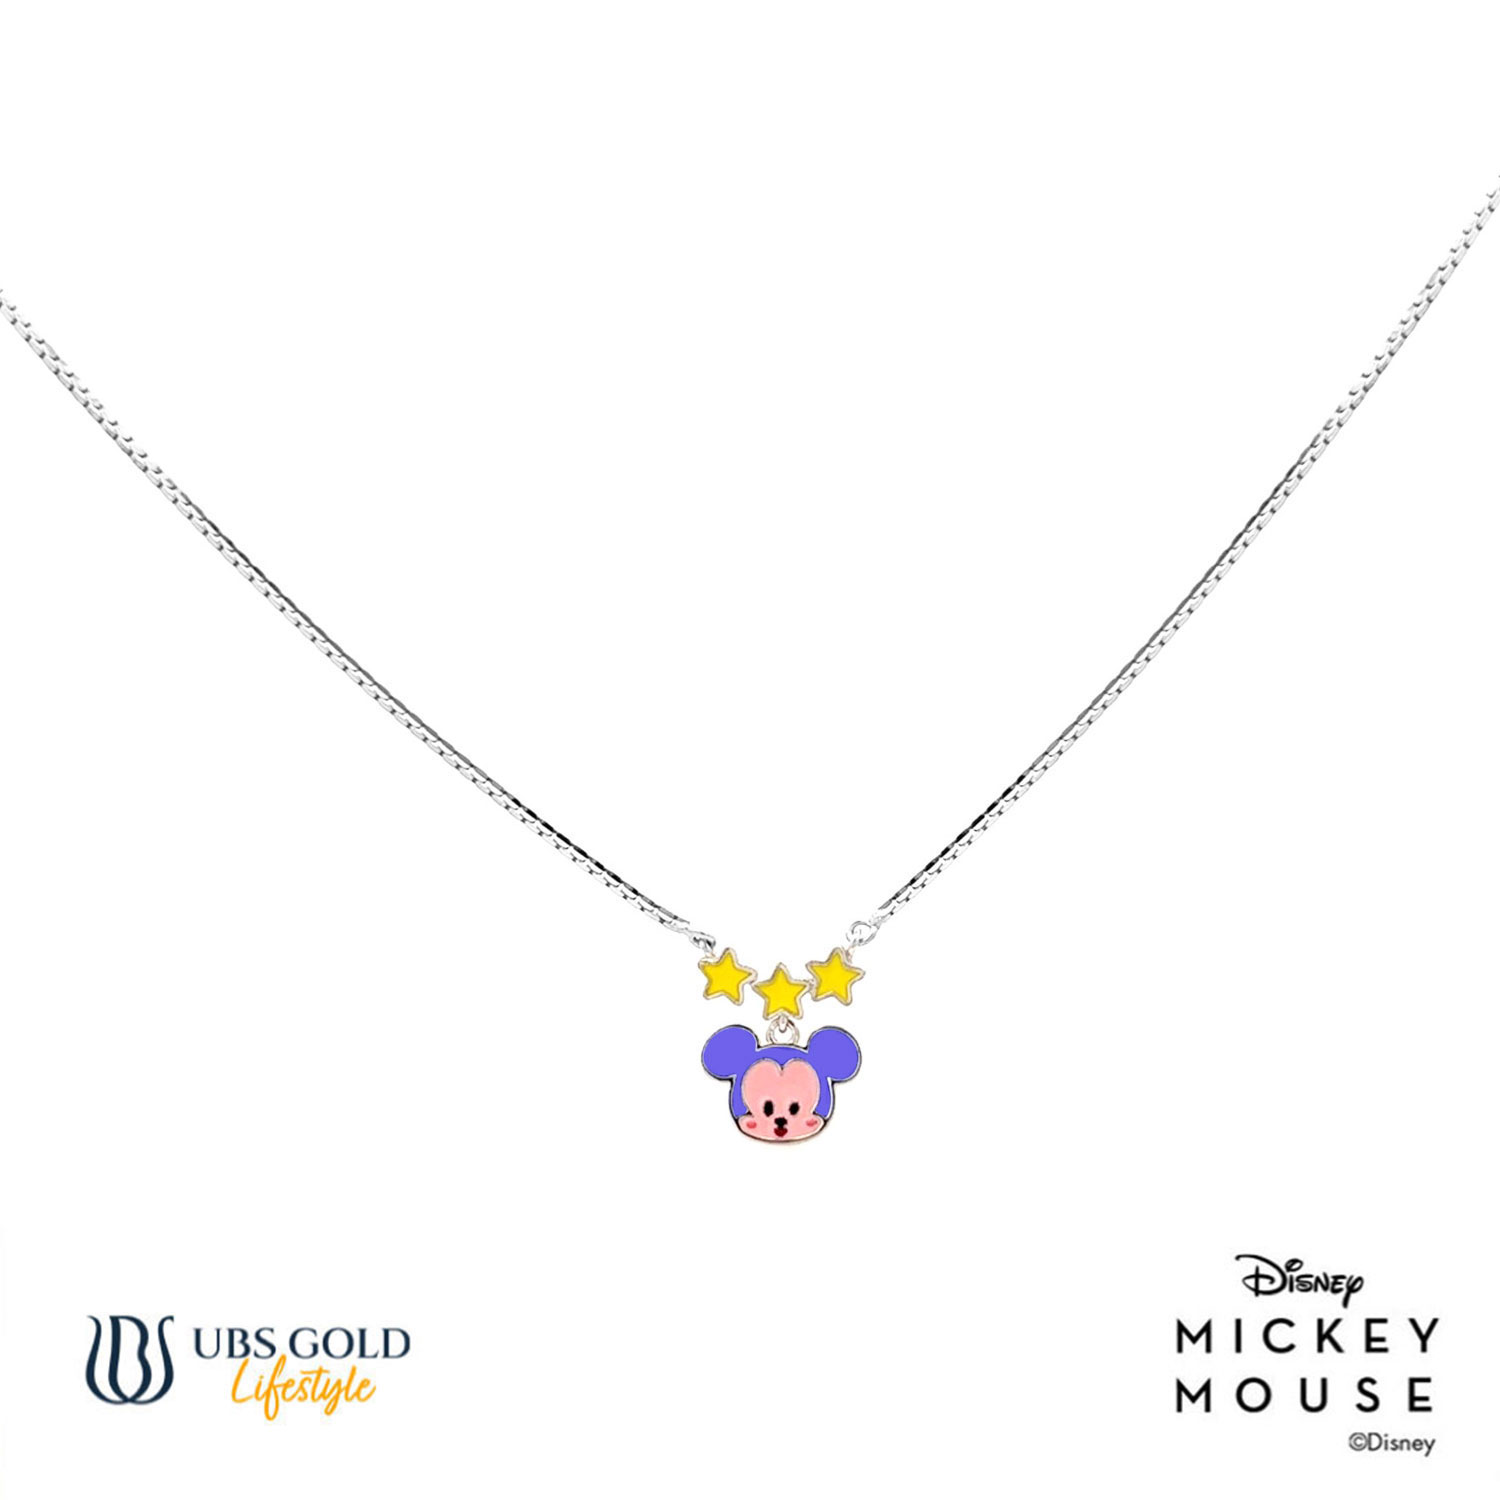 UBS Gold Kalung Emas Anak Disney Mickey Mouse - Kky0445 - 17K